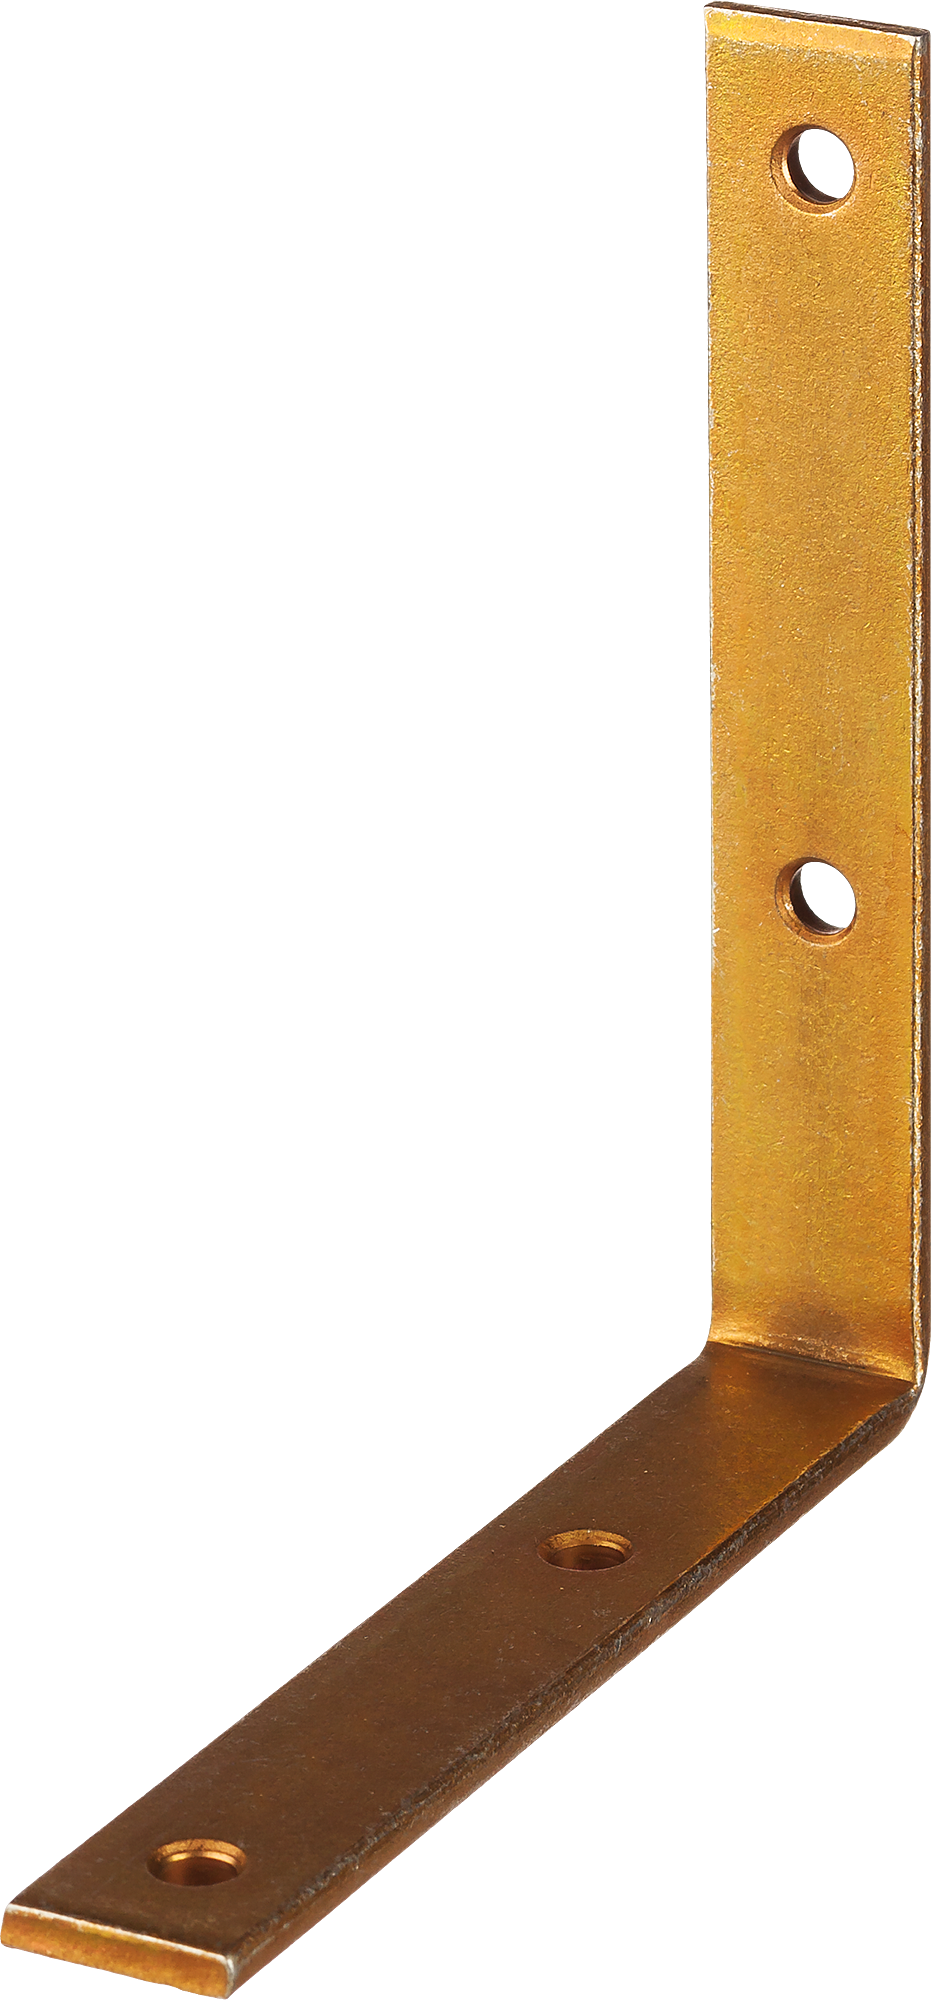 Уголок мебельный ЗУБР МАСТЕР УМ-5.0, 15 см x 15 см x 2.5 см, 5 мм, желтый цинк, 1 шт. (31031-150)